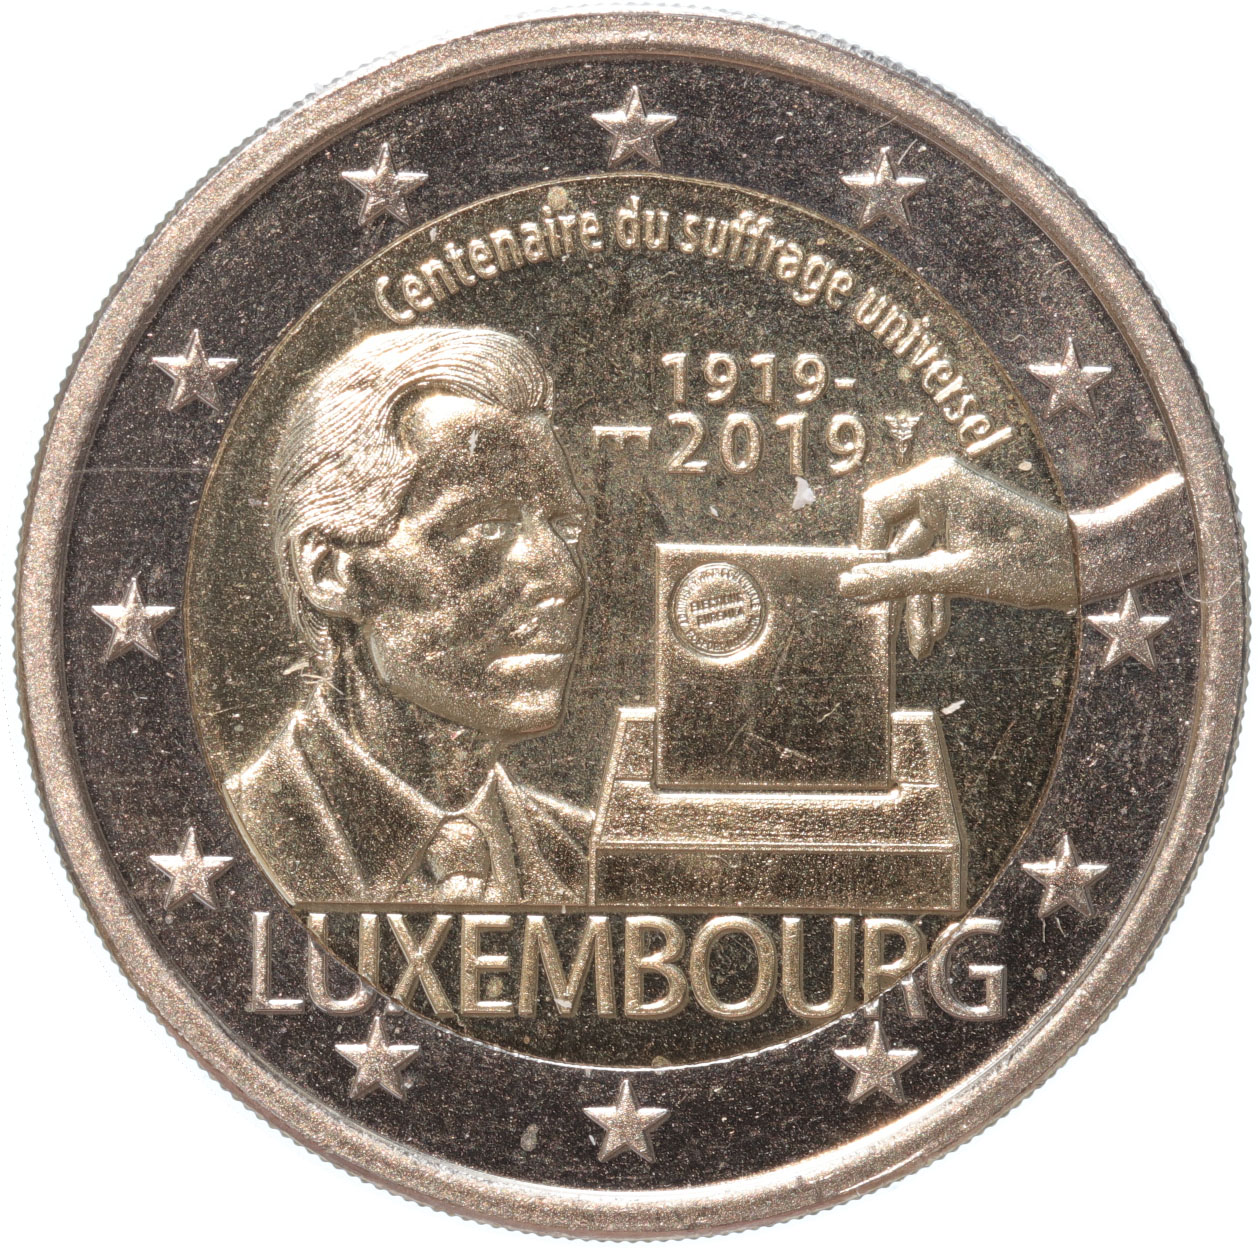 Luxemburg 2 euro 2019 Stemrecht mmt brug UNC